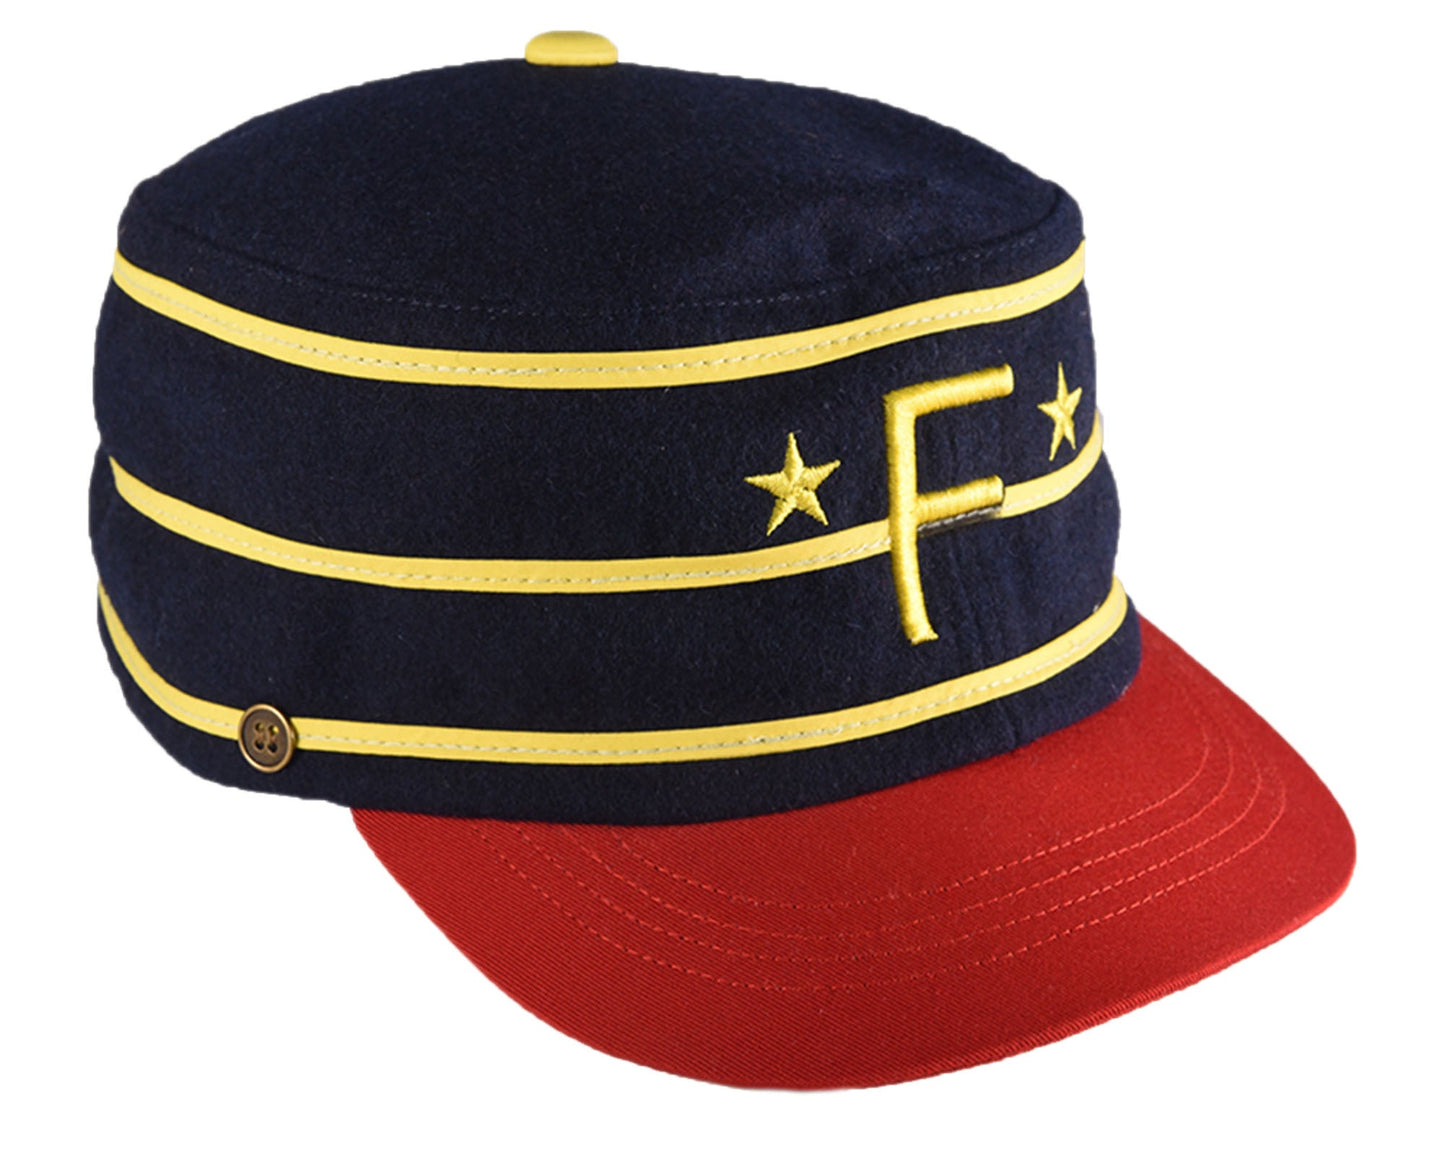 The 1930'S Vintage Baseball Cap - Navy